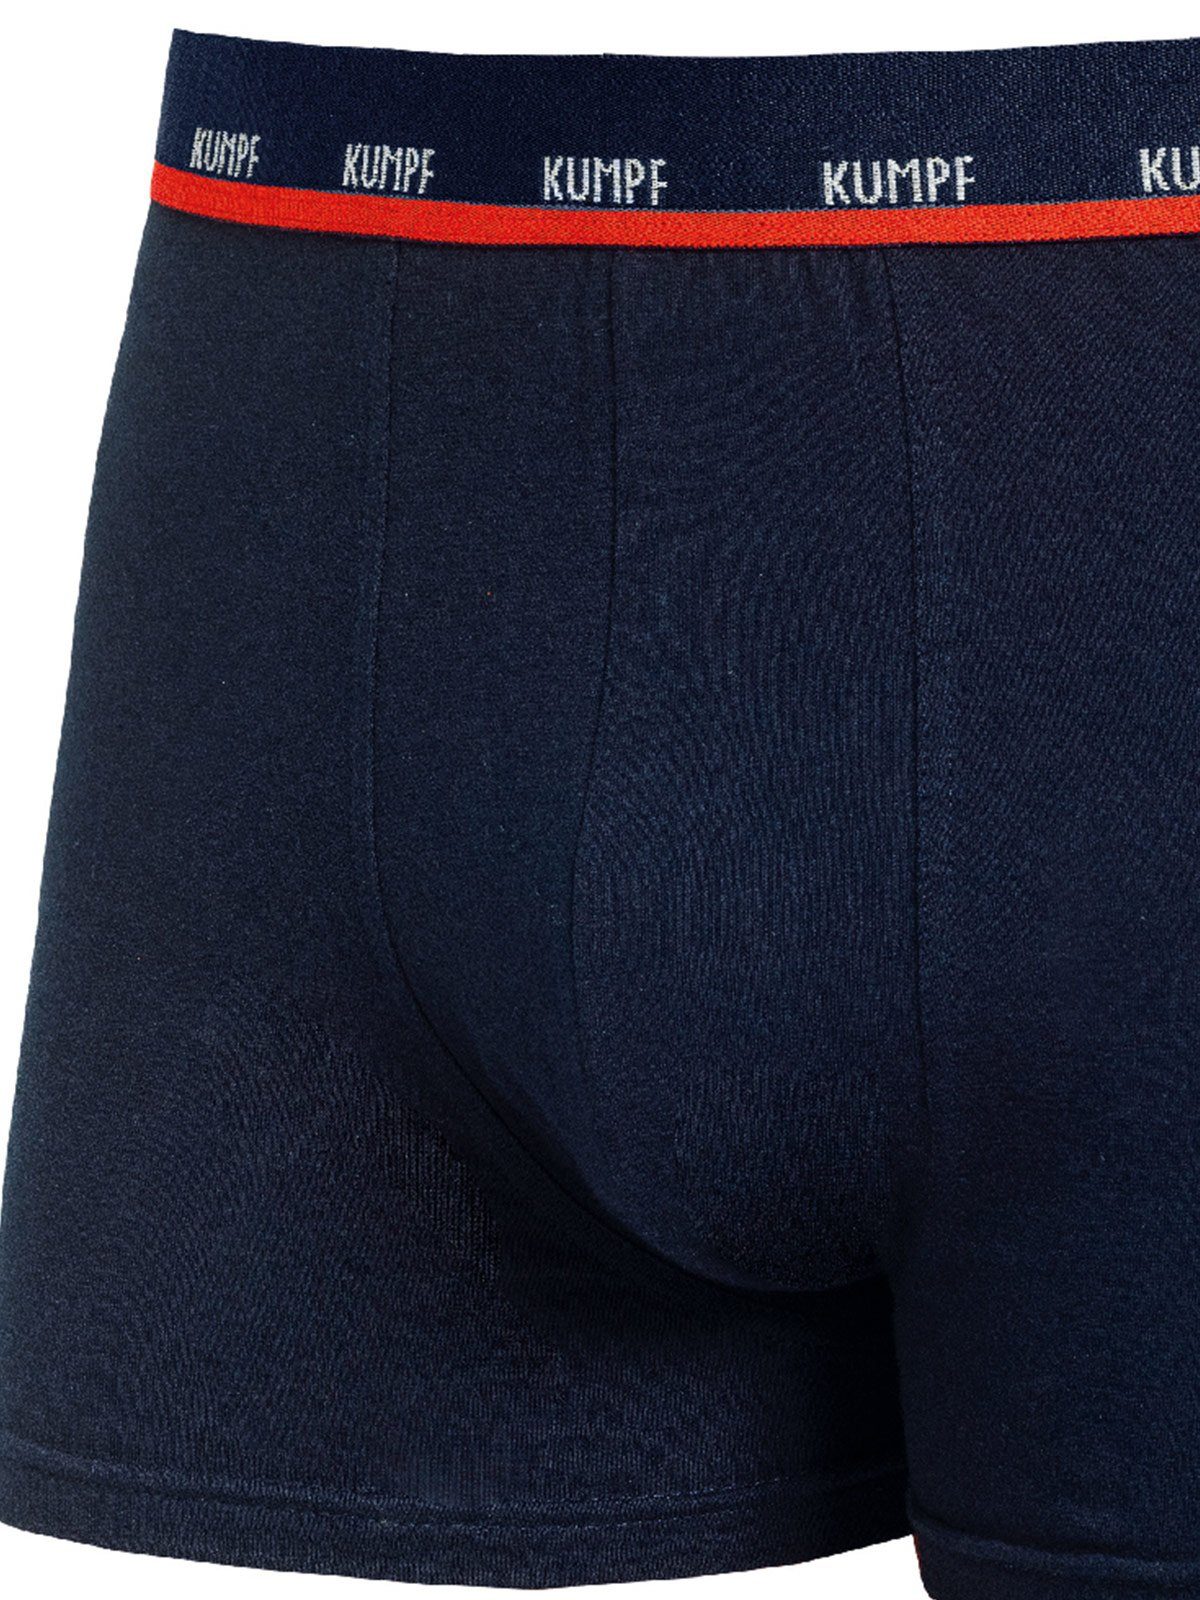 Gummibund KUMPF Retro Stretch mit Materialmix 3-St) Pants Cotton Pants (Packung, navy 3er Pack Herren